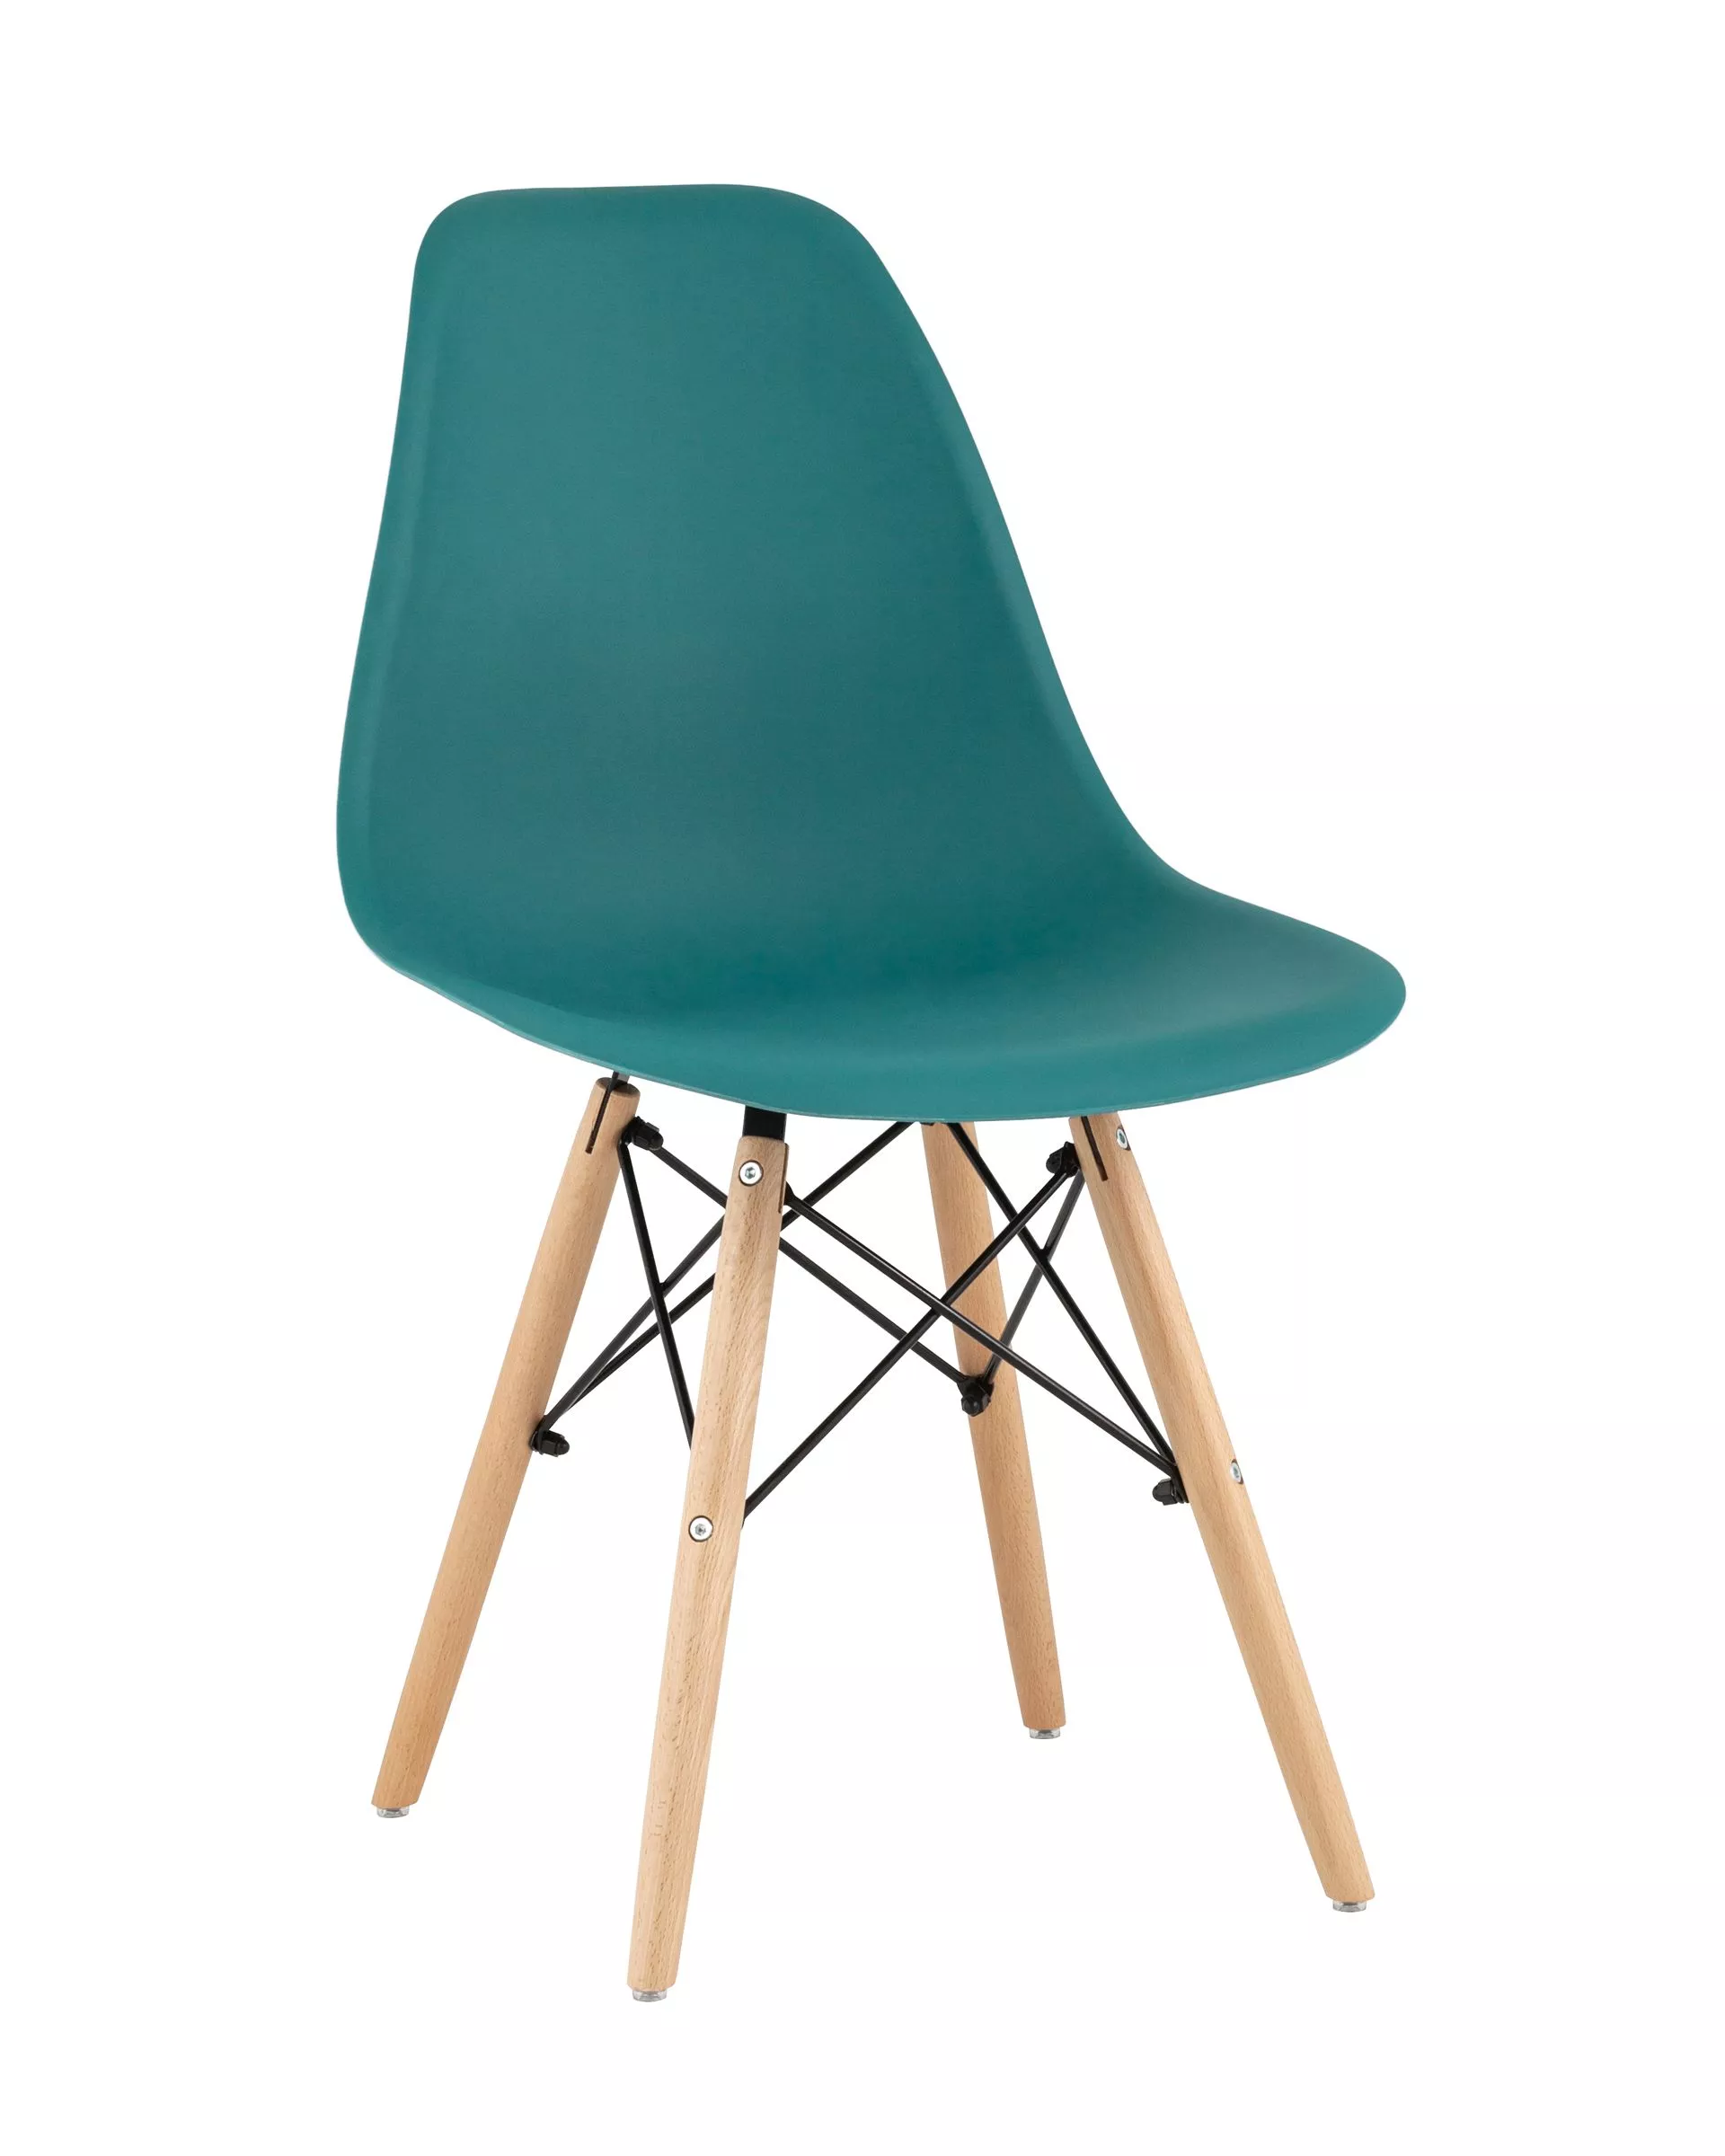 Комплект стульев Style DSW темно-бирюзовый x 4